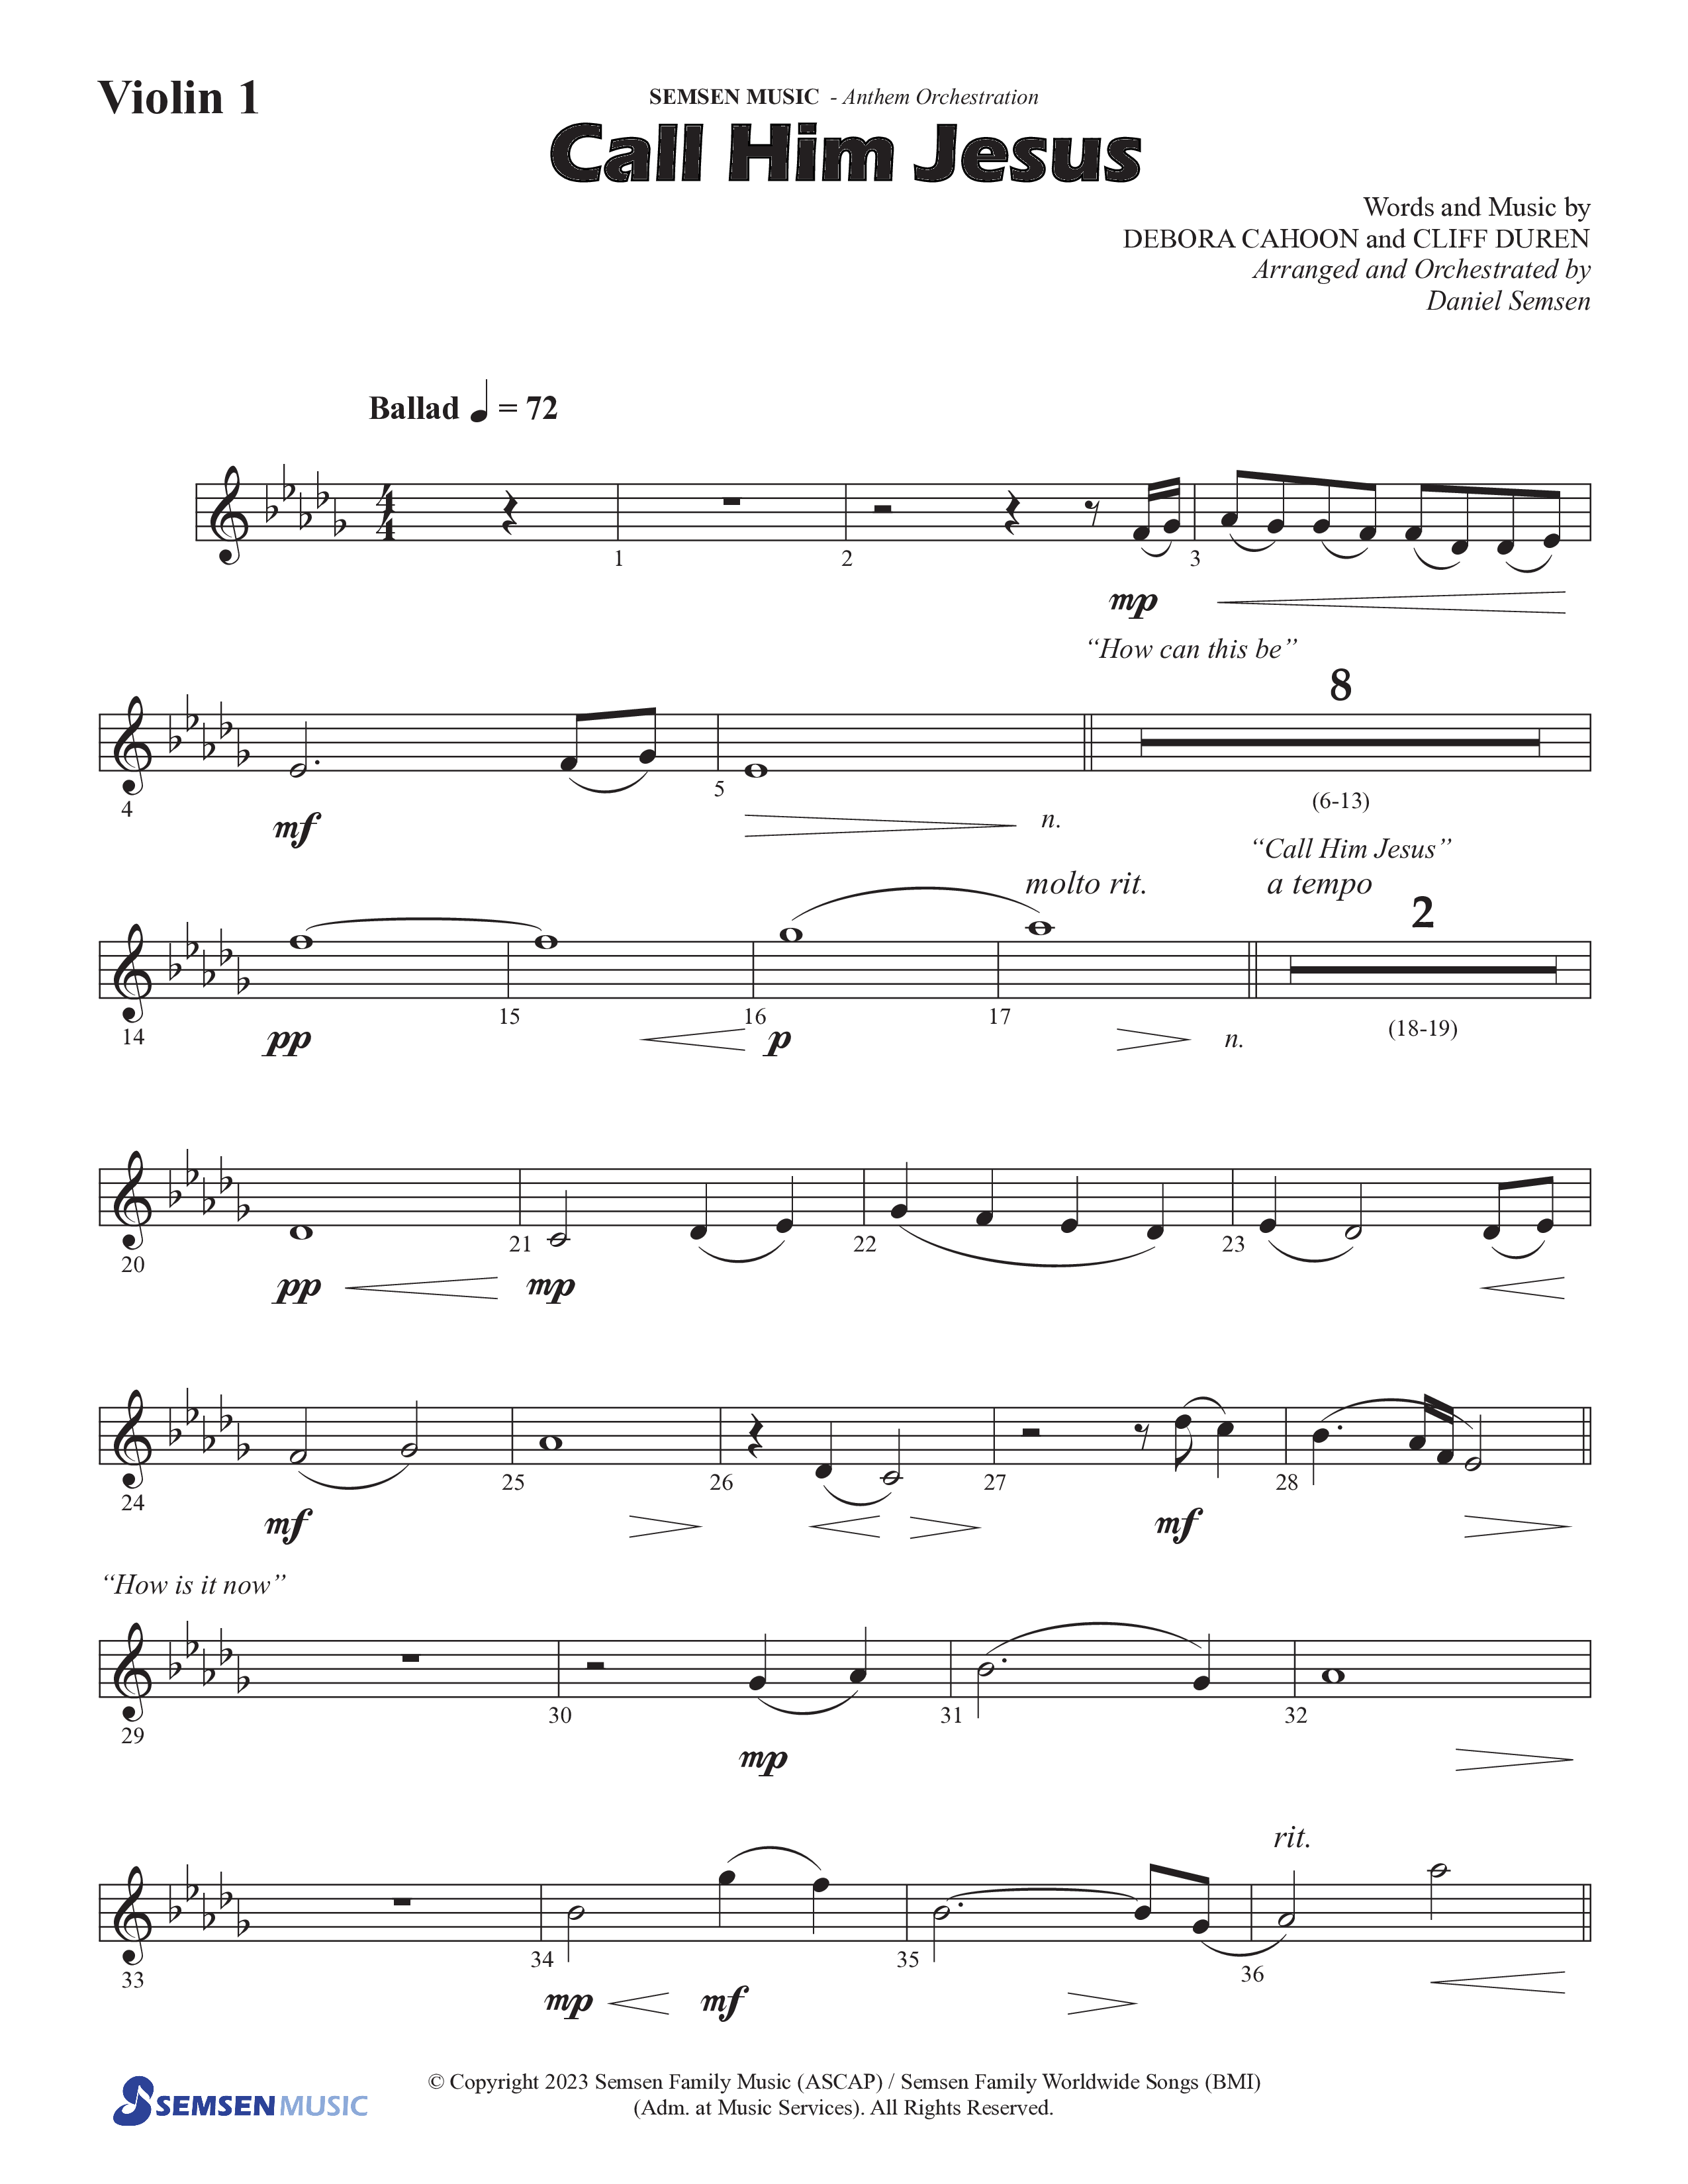 Call Him Jesus (Choral Anthem SATB) Violin 1 (Semsen Music / Arr. Daniel Semsen)